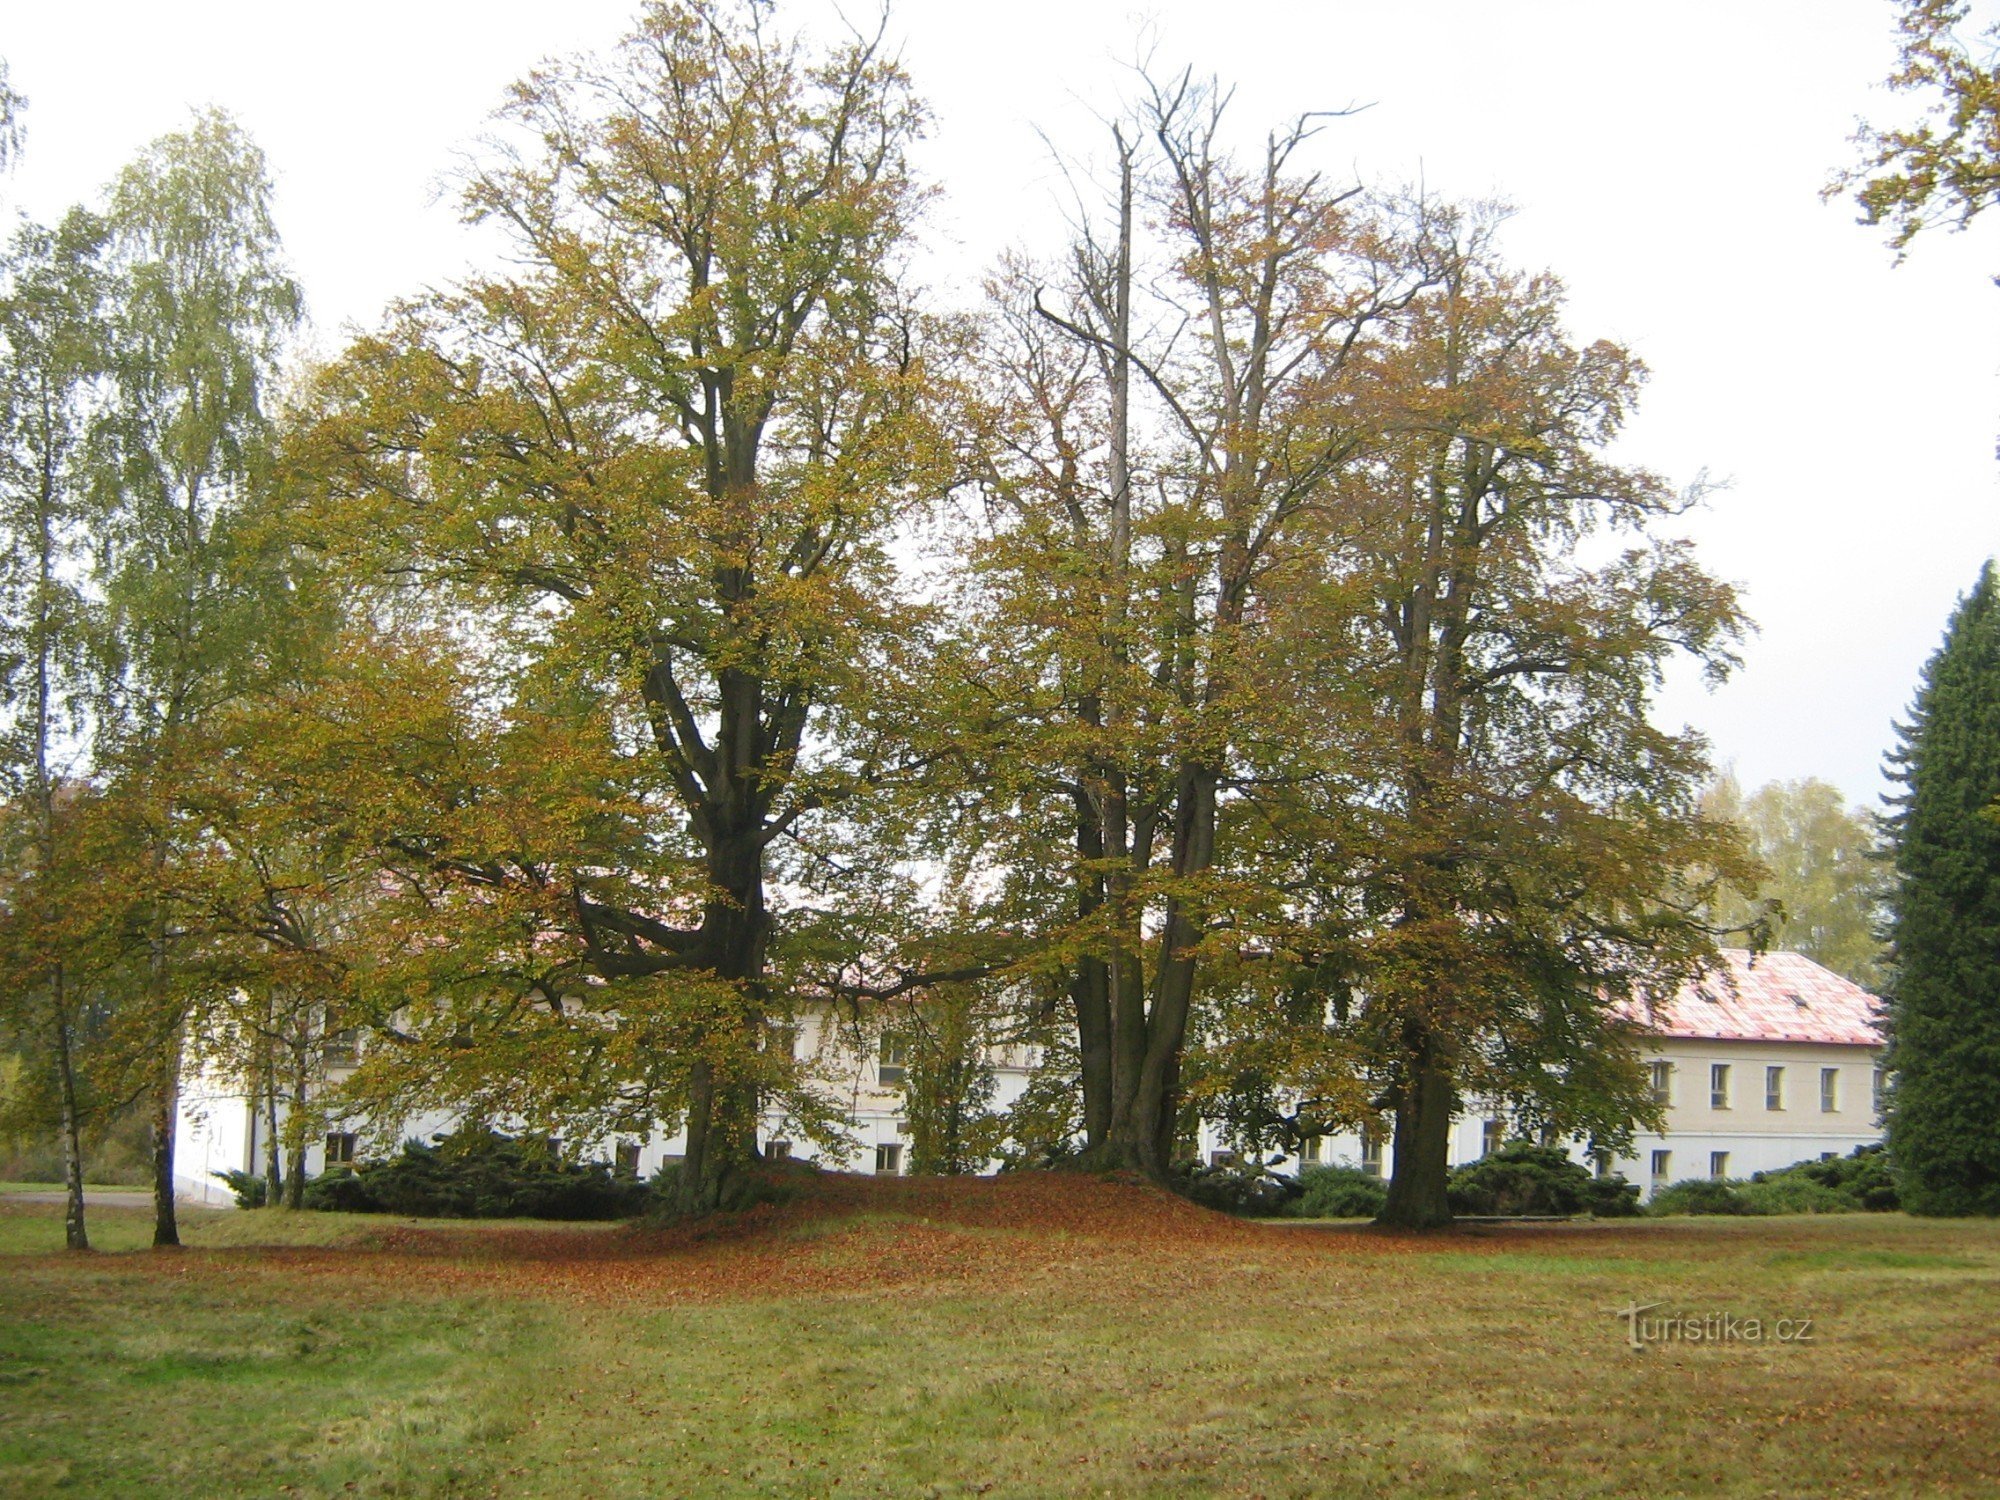 Březina - park en kasteel